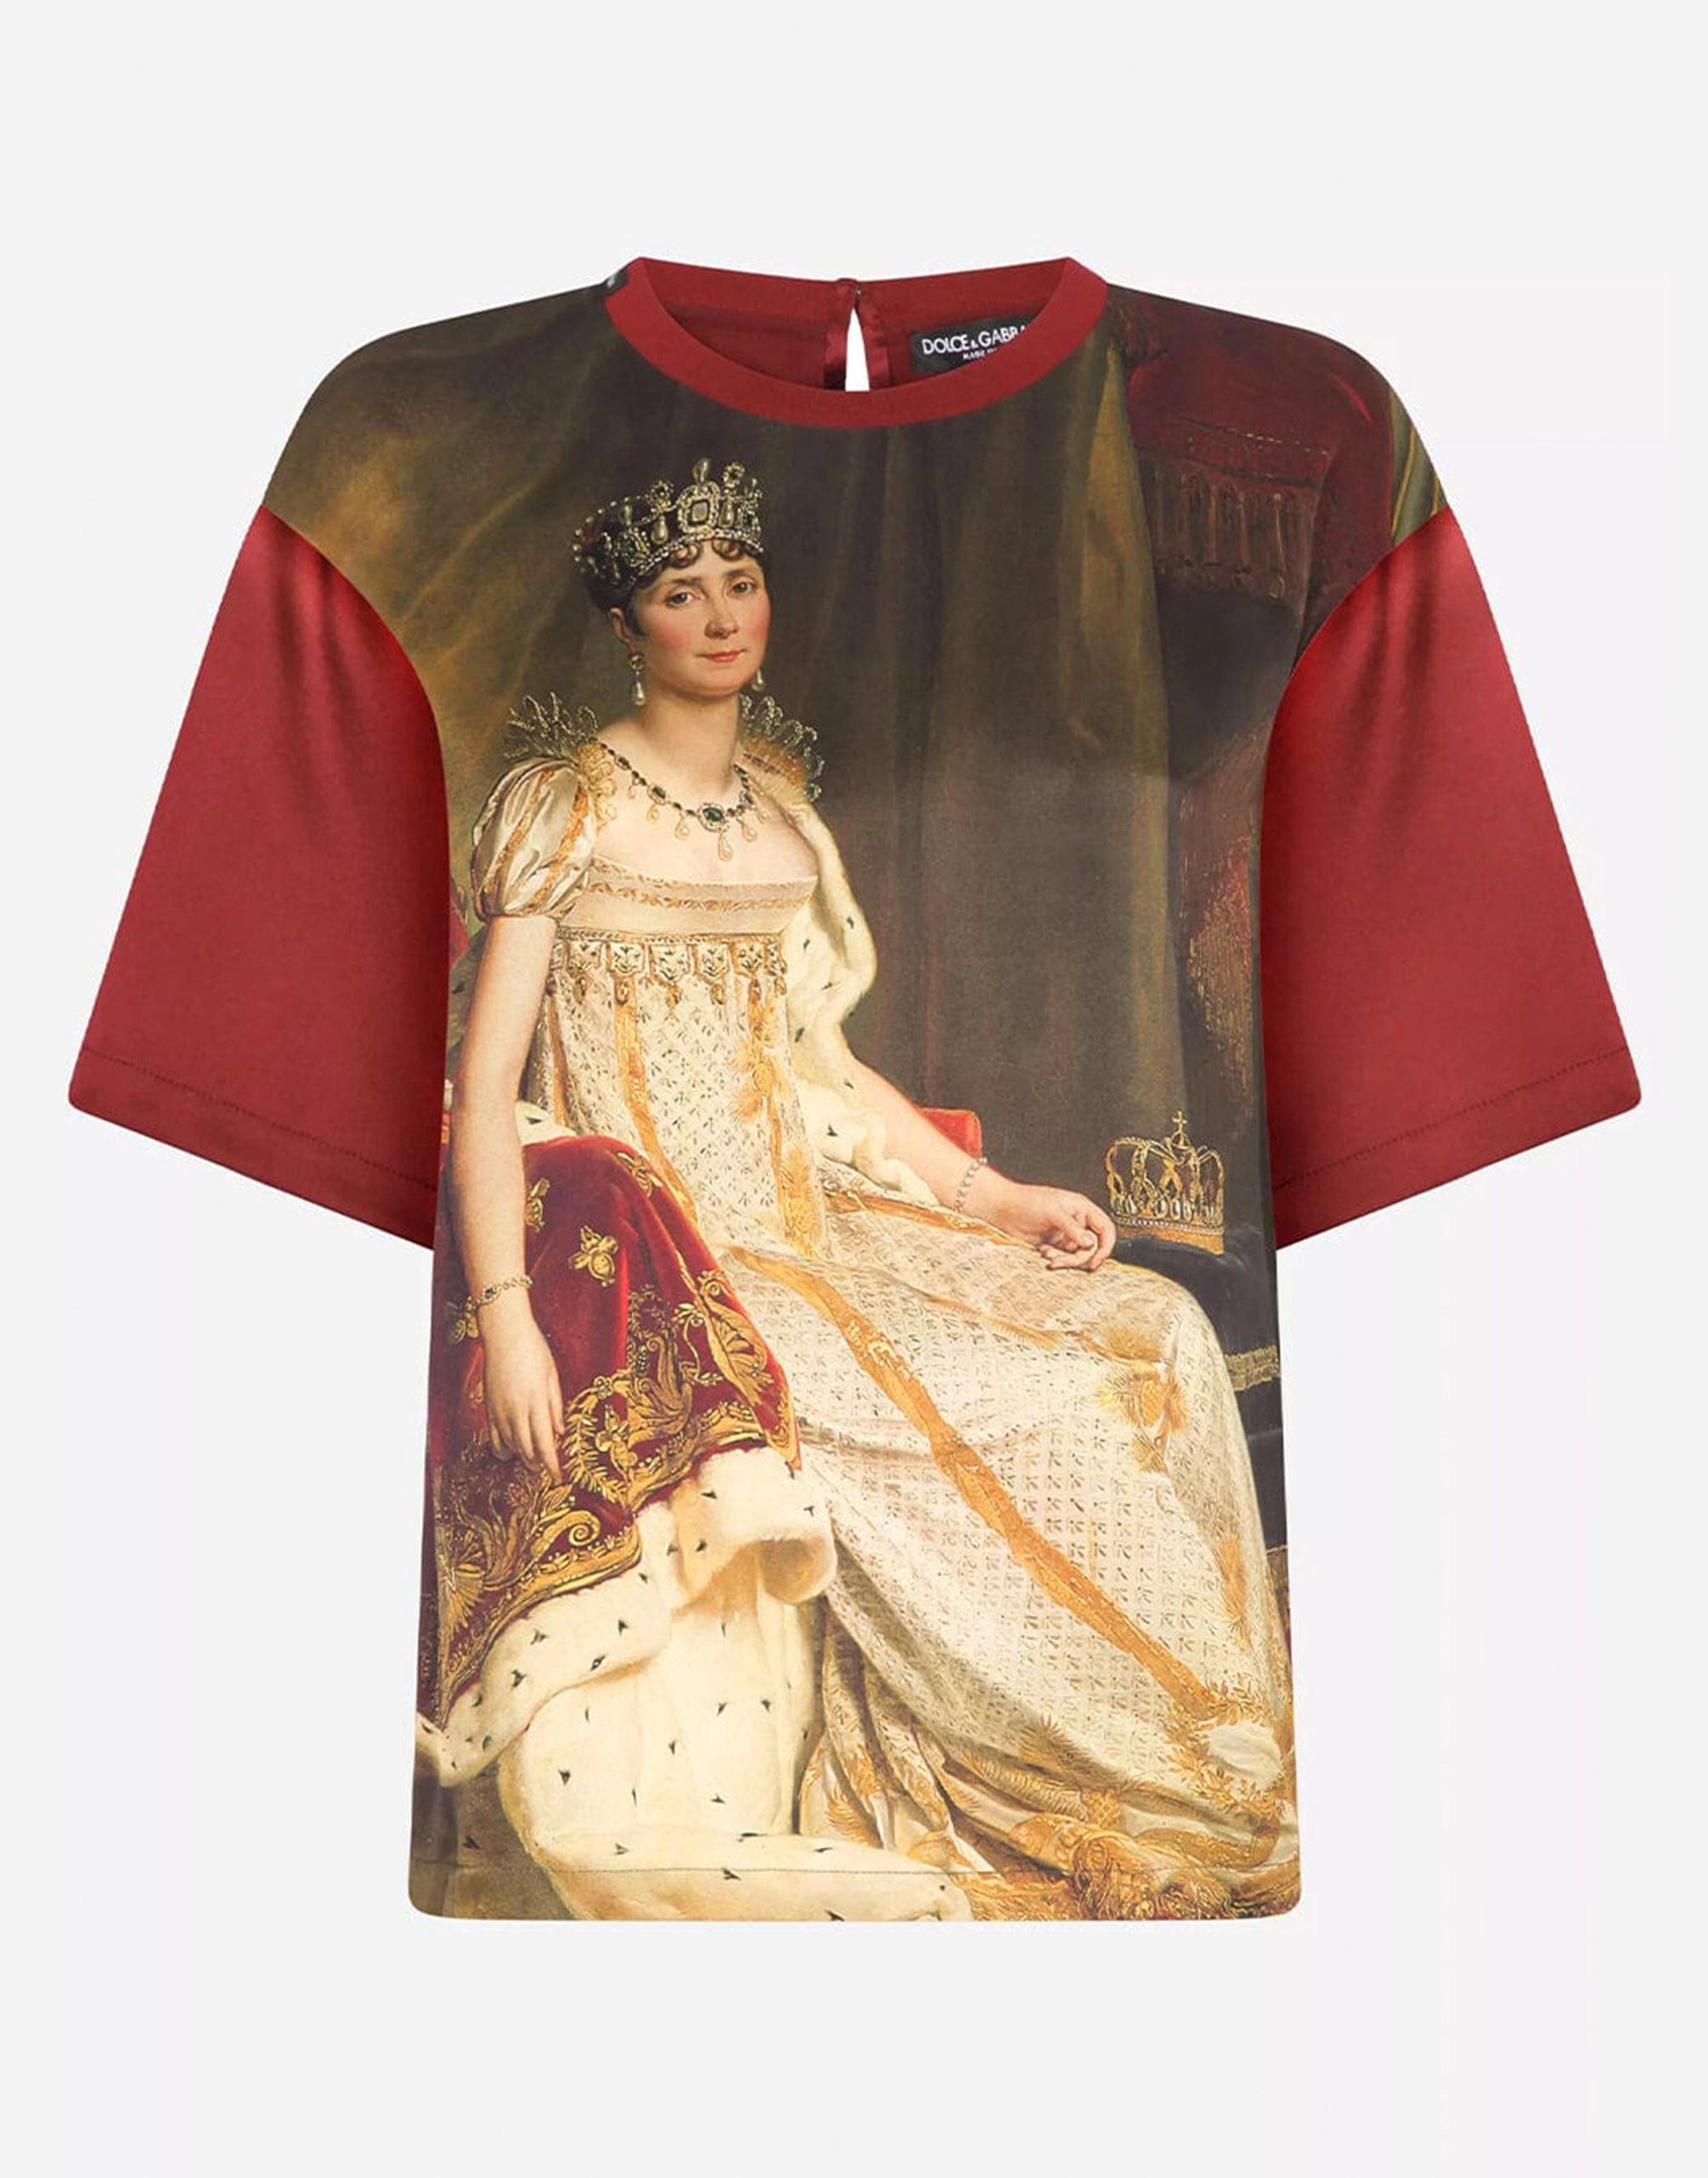 Dolce & Gabbana Josephine Bonaparte Print T-Shirt